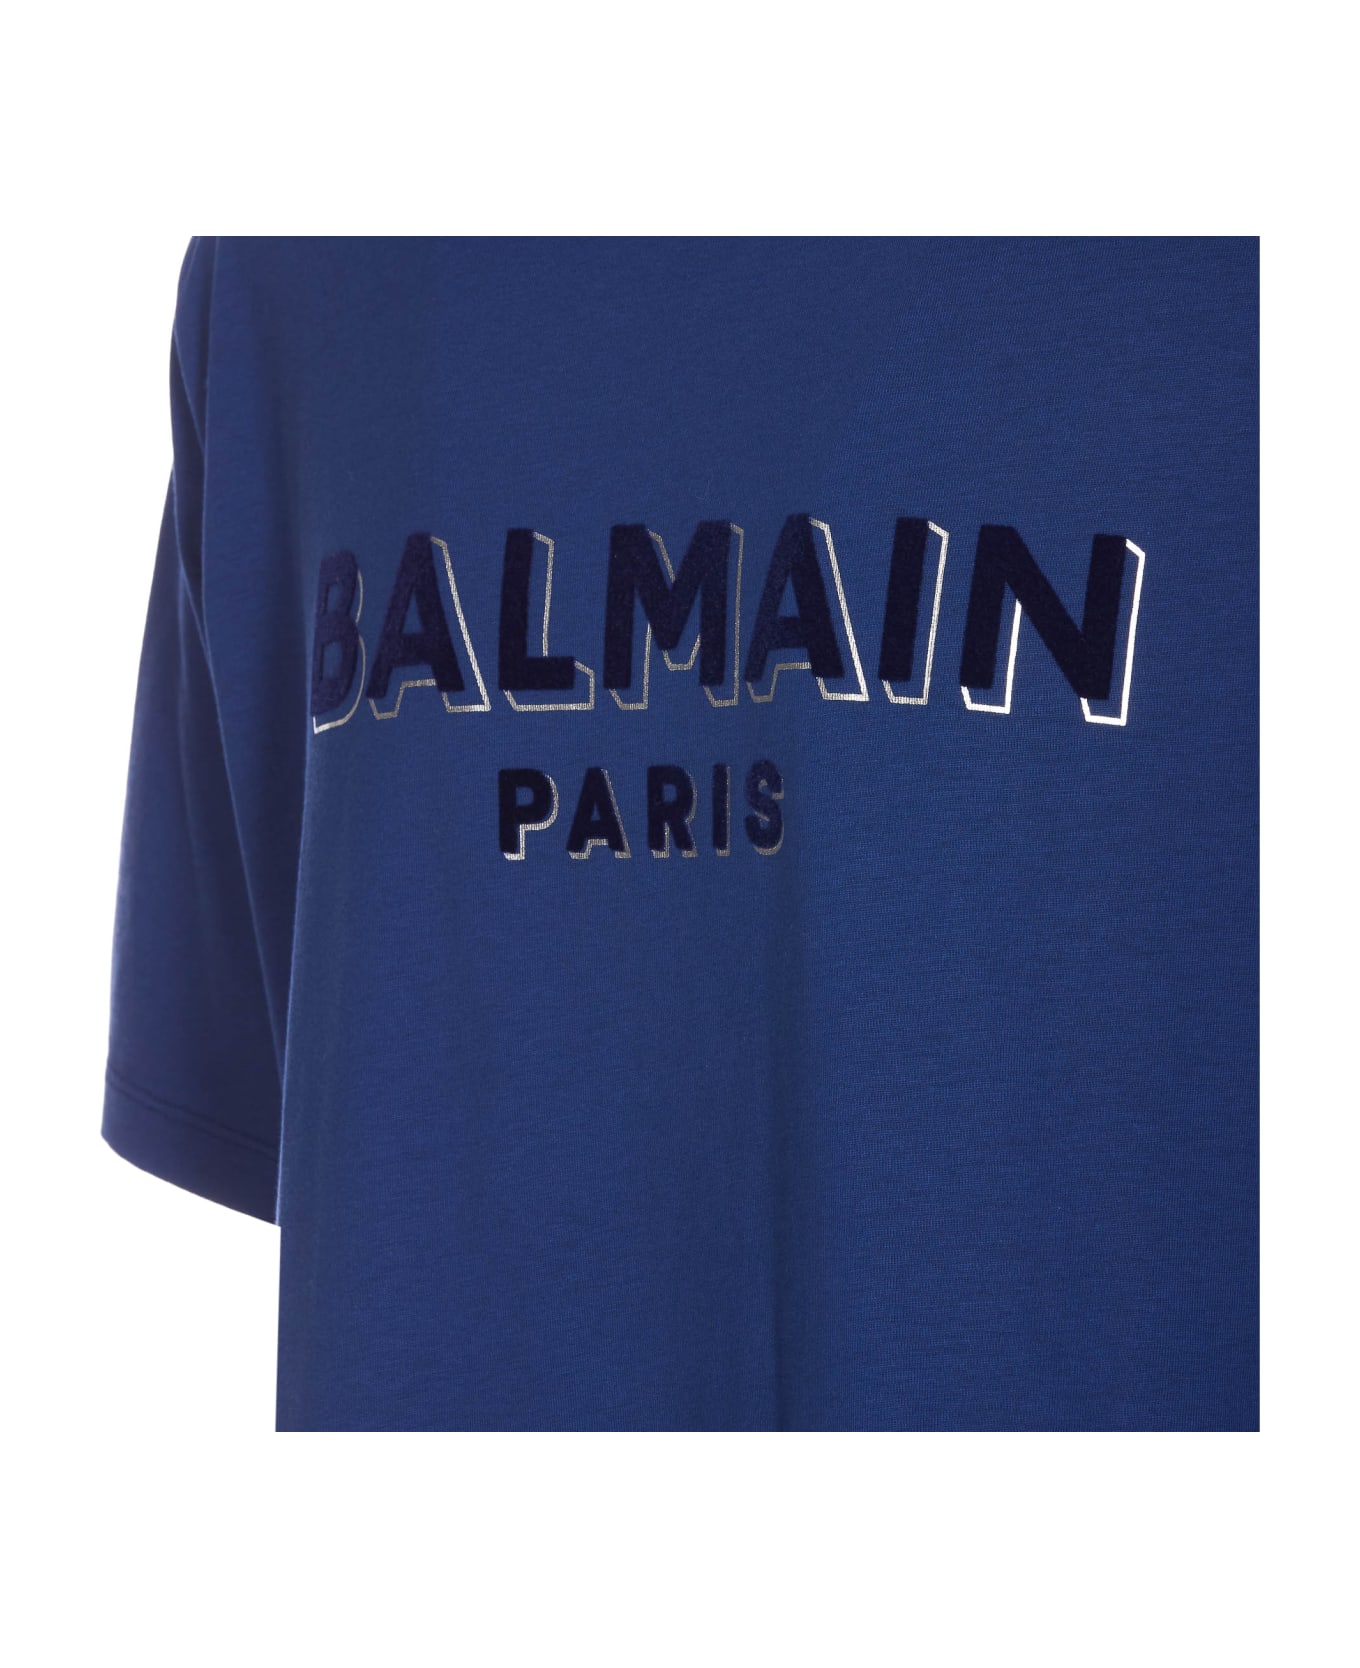 Balmain Logo T-shirt - Blue